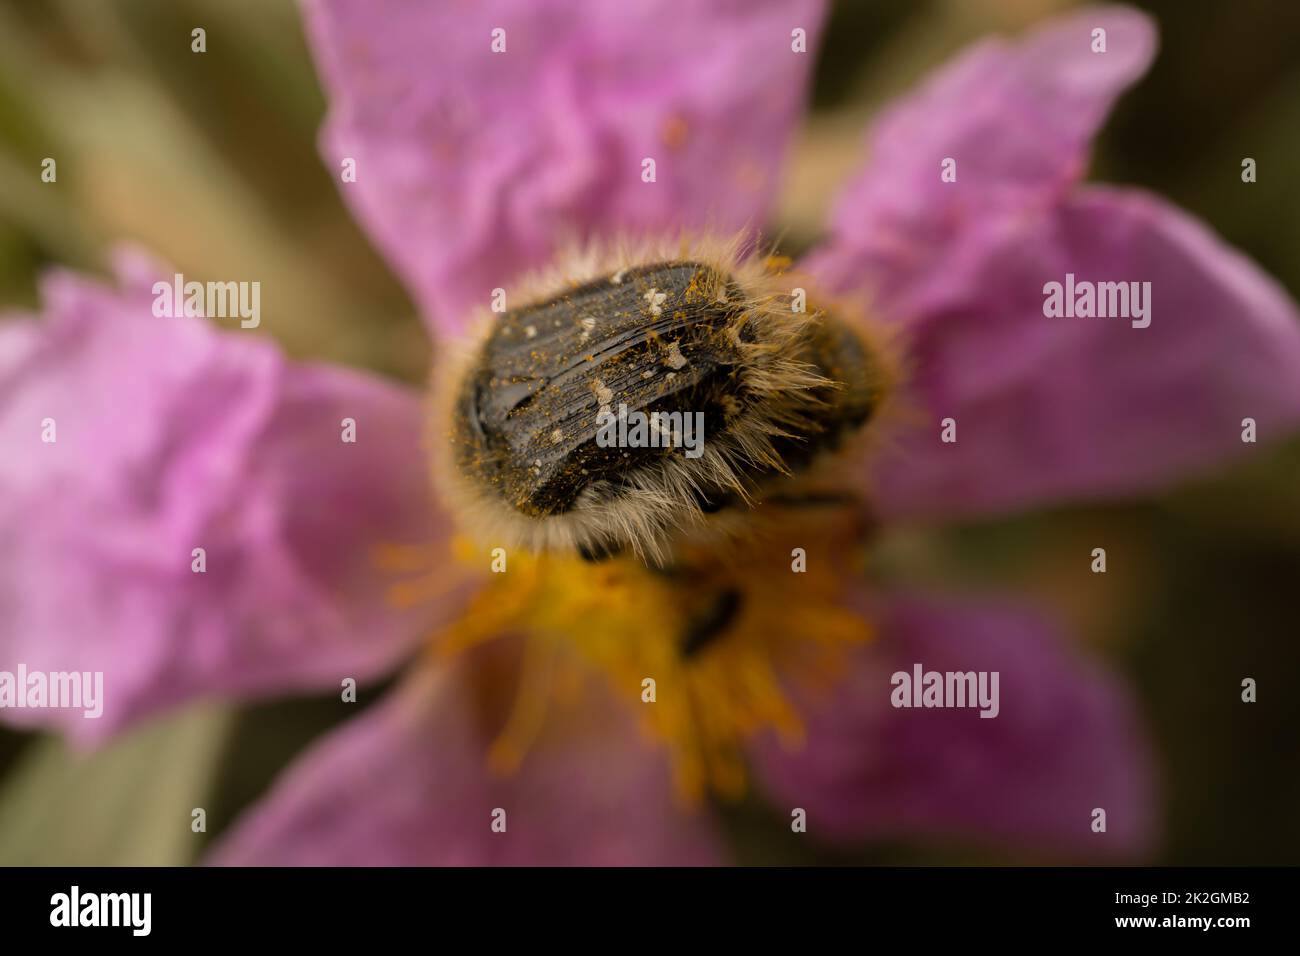 hairy beetle feeding on a flower Stock Photo